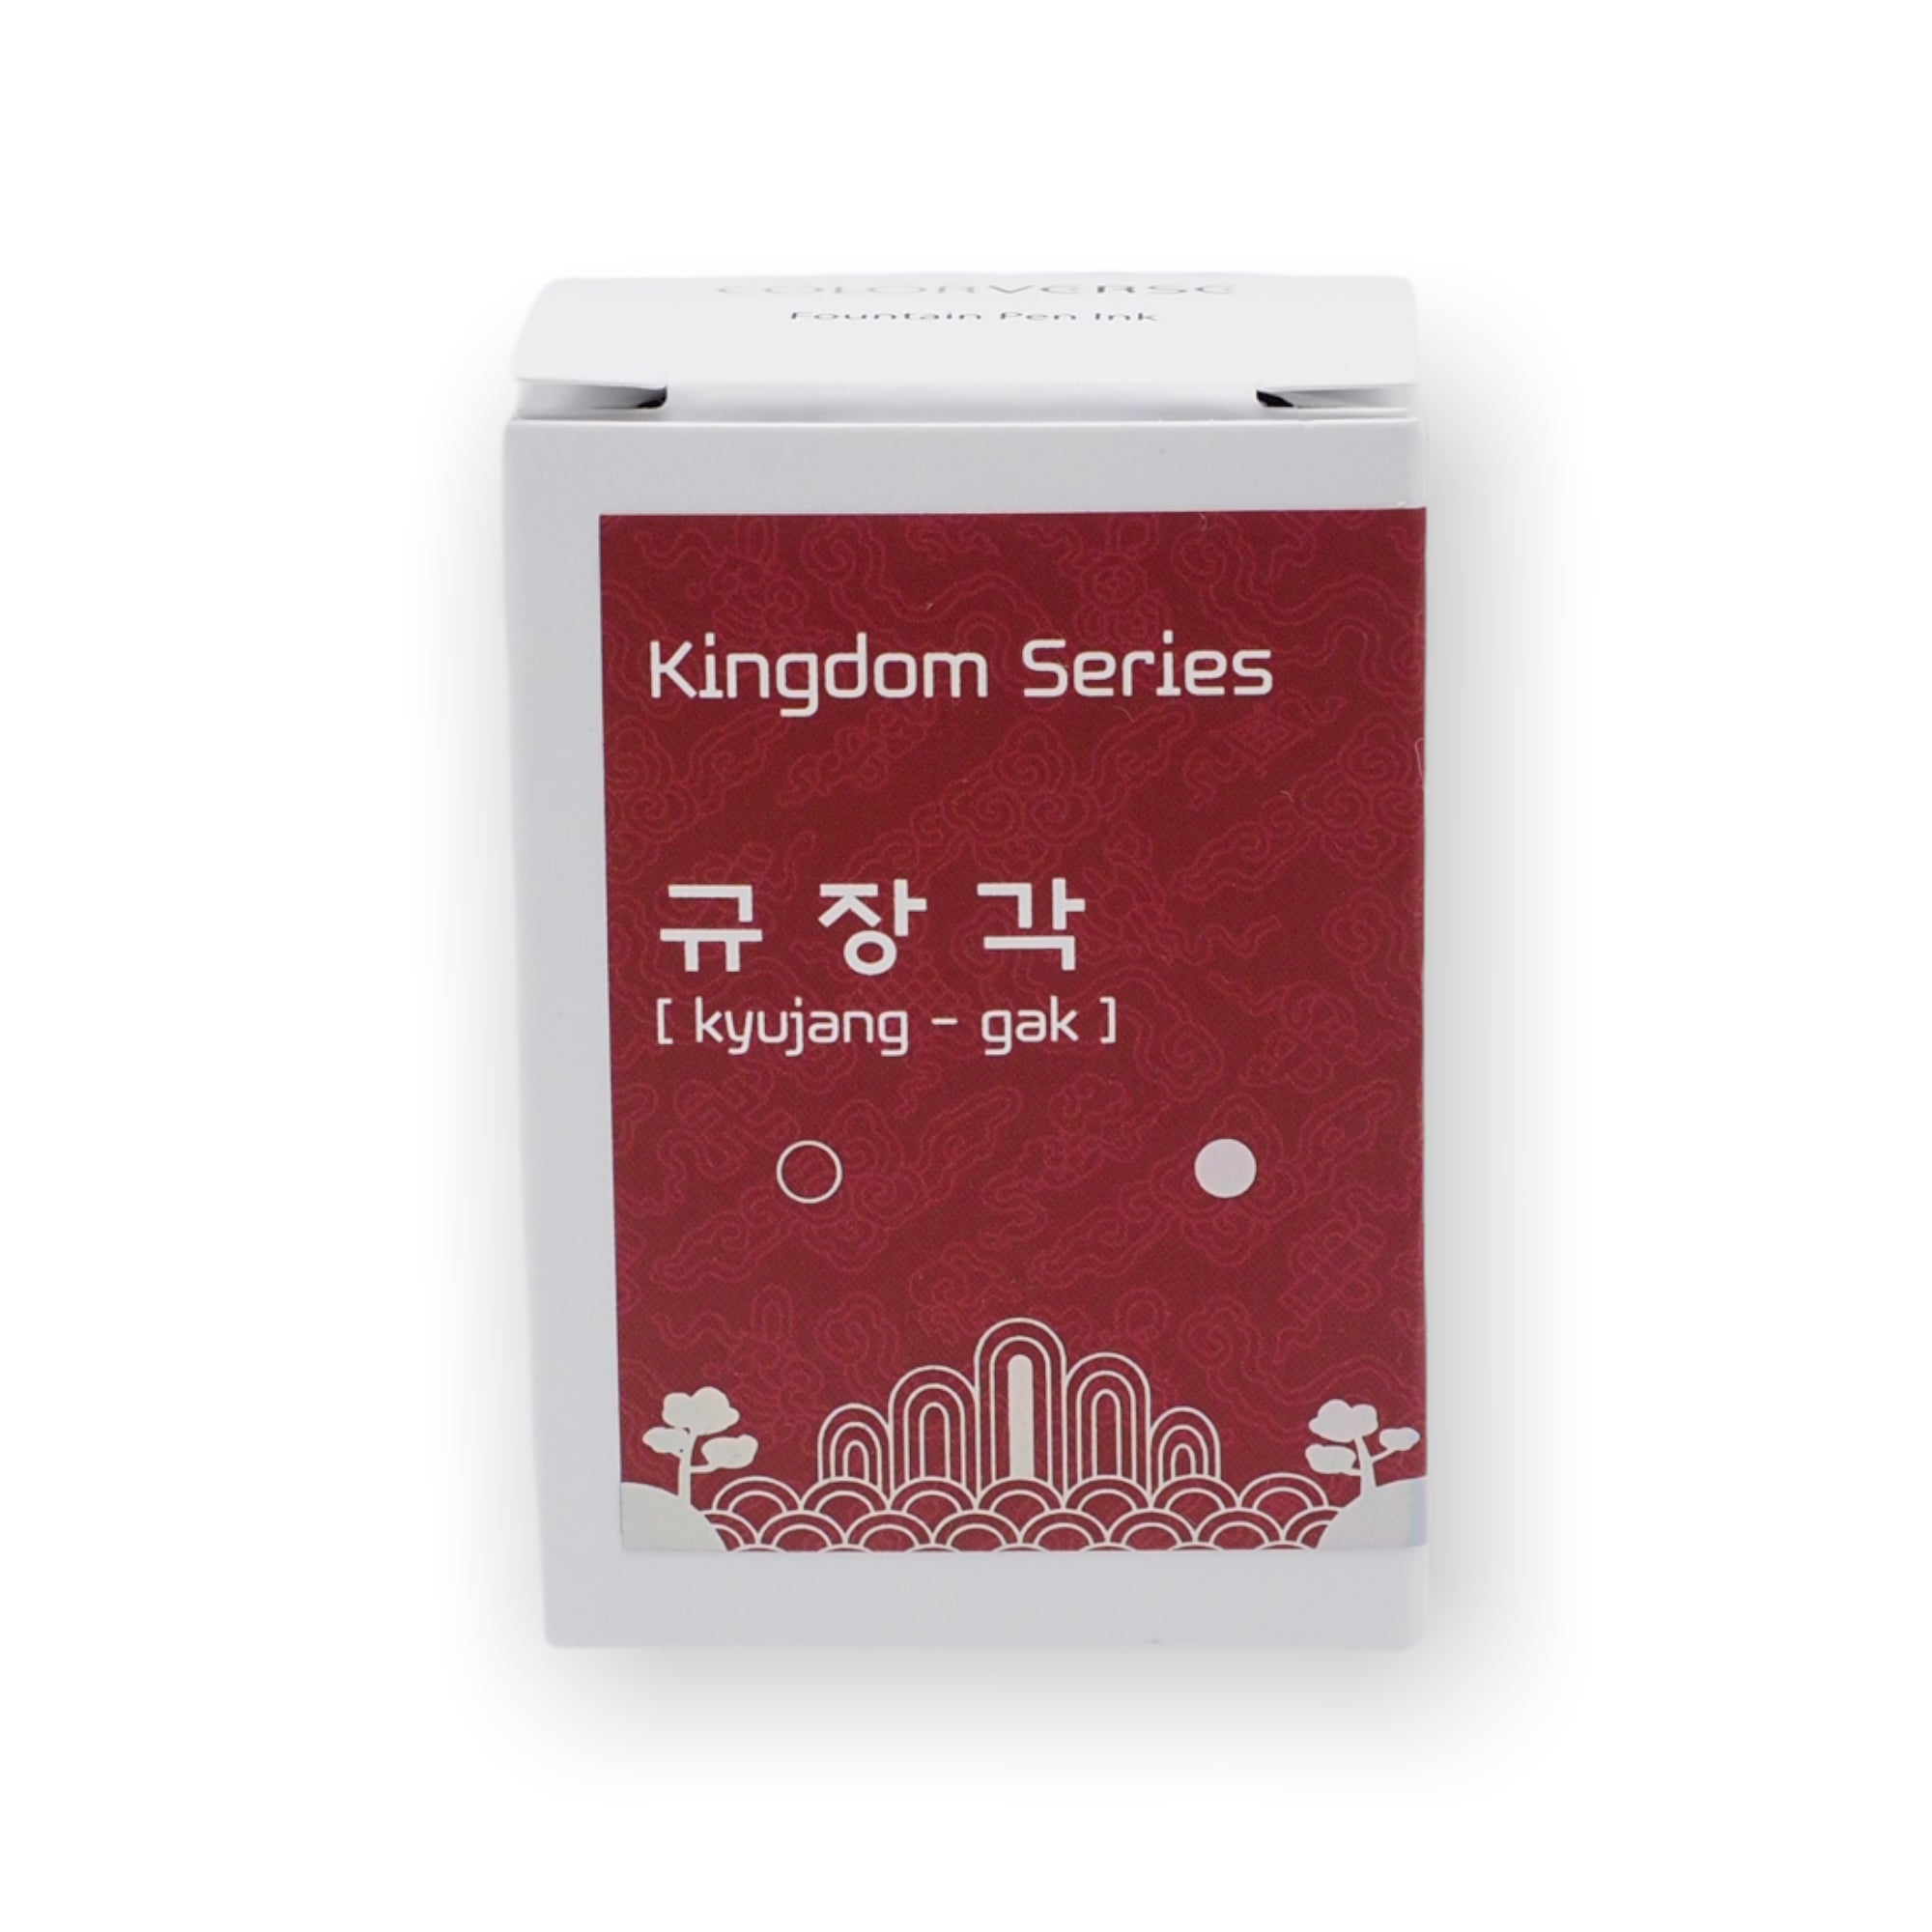 Colorverse Kingdom Series No. 021 - kyujang gak